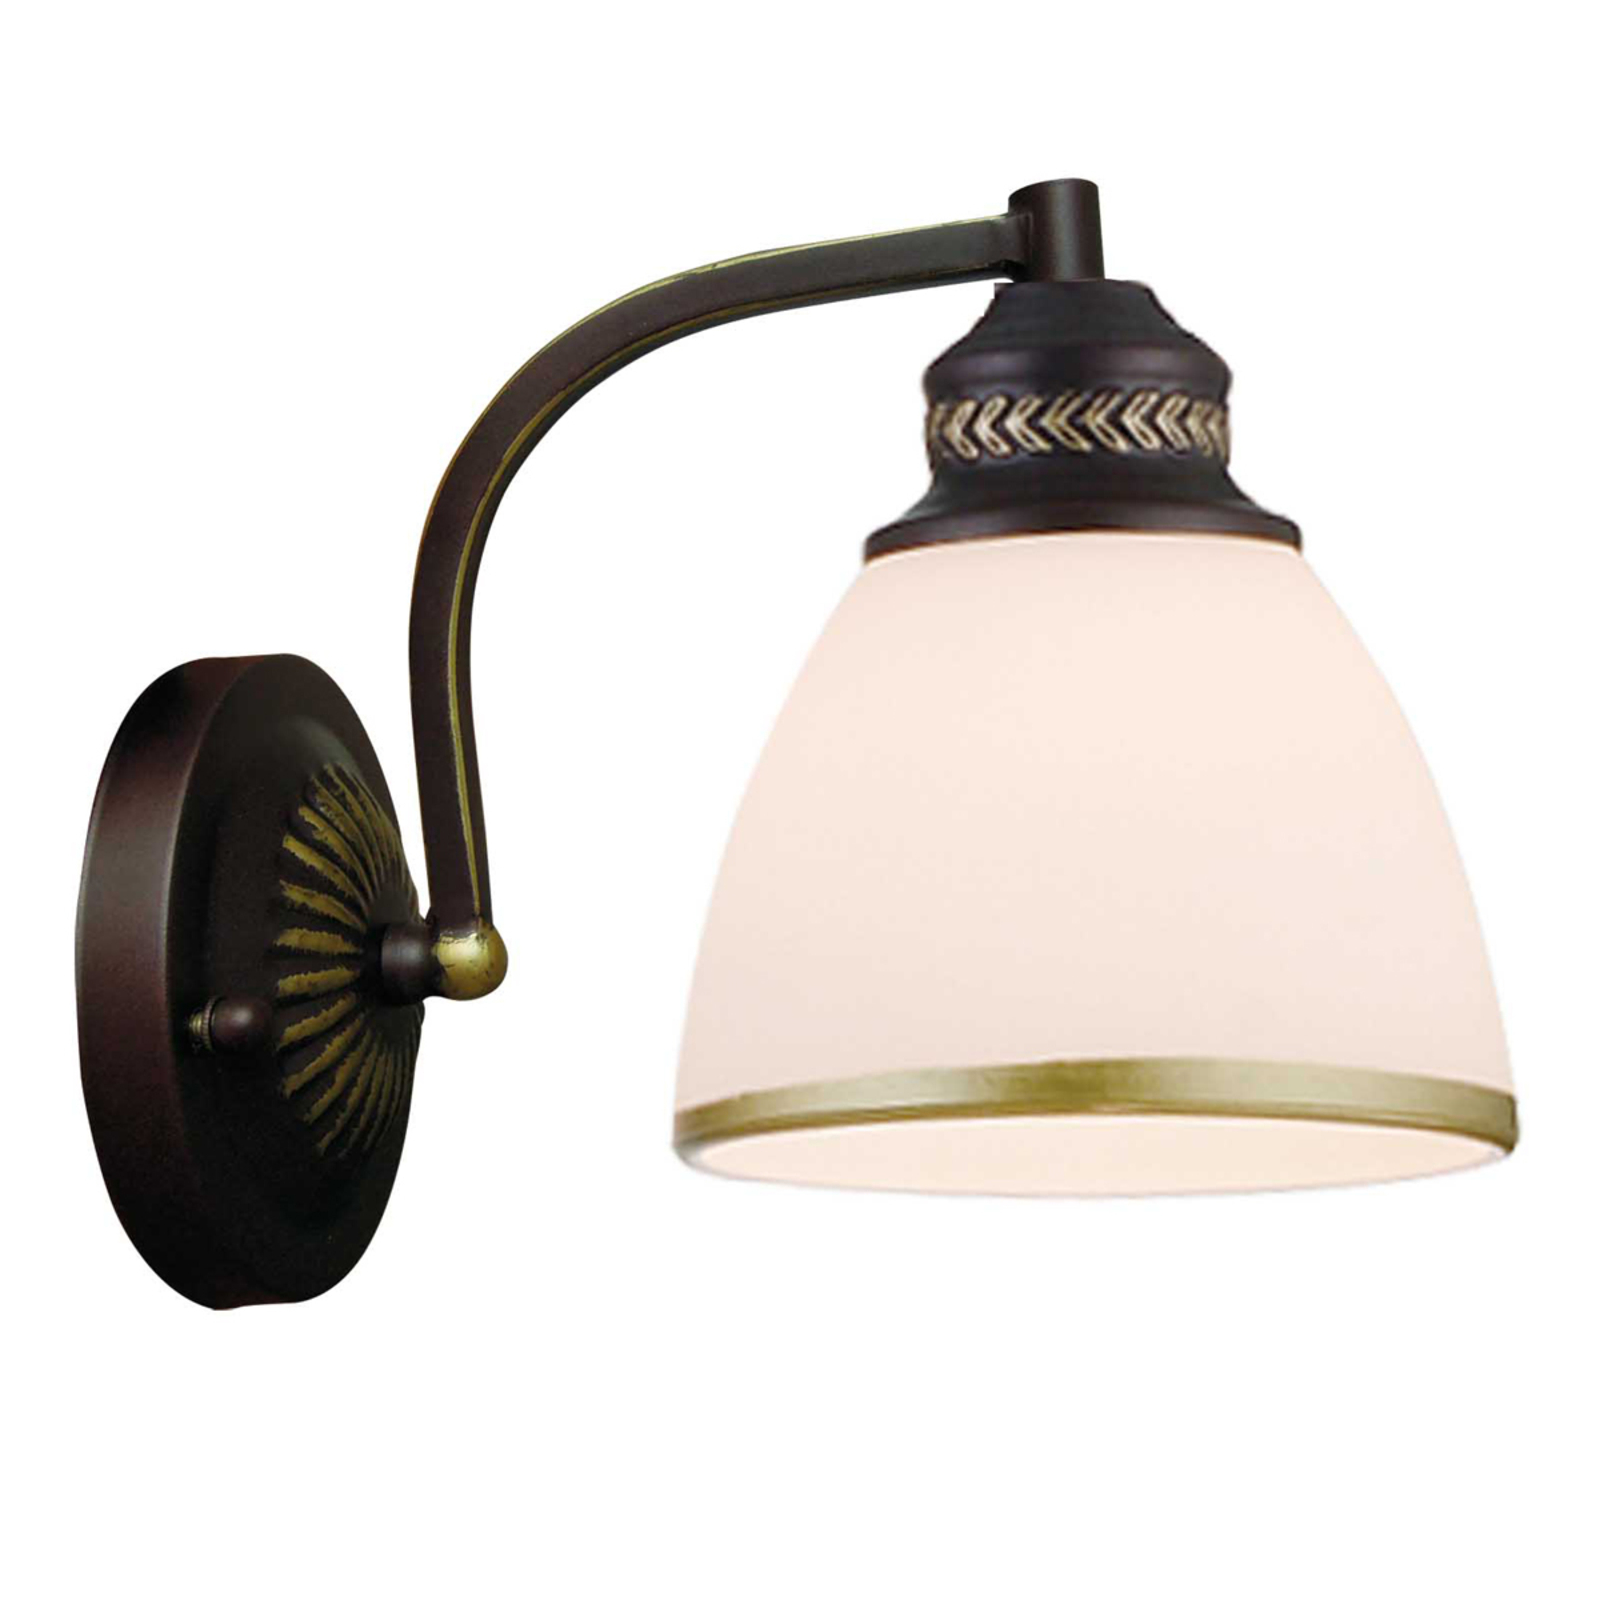 Clair - barna fém fali lámpa üveg ernyővel